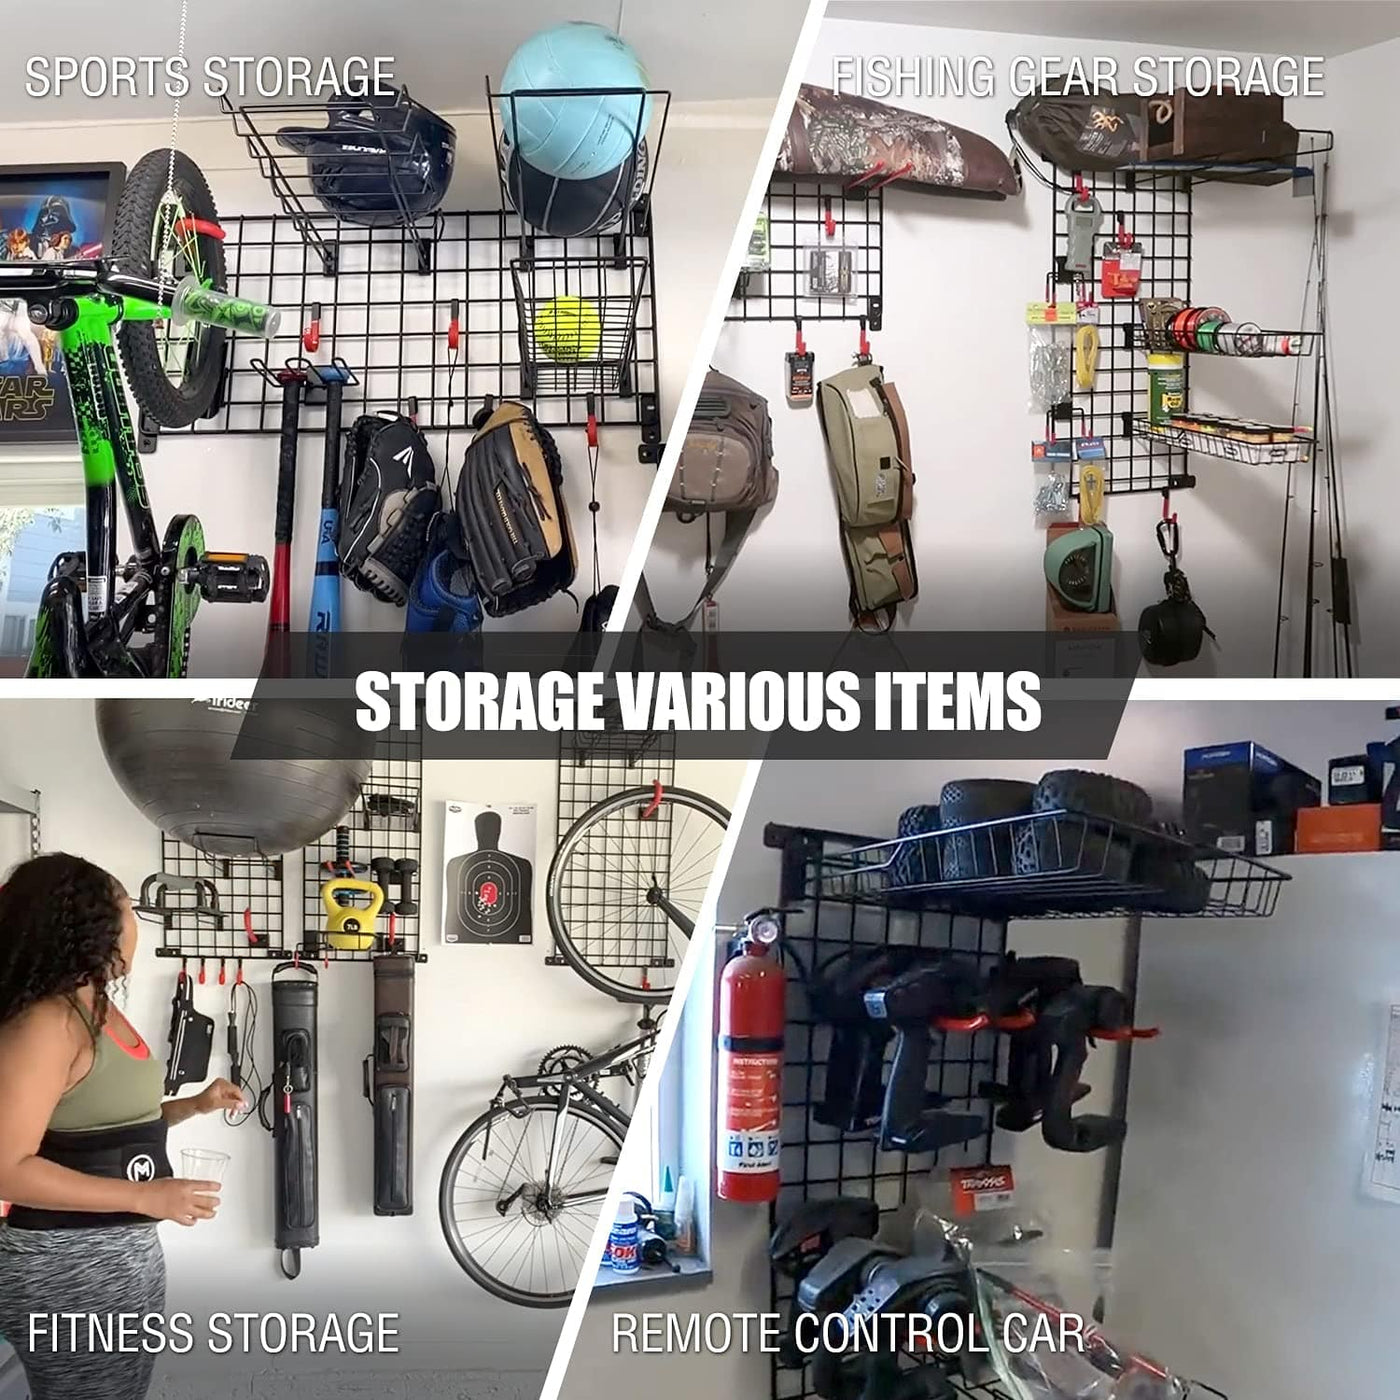 Mythinglogic Garage & Storage Wall Mount Garage Storage Shelves